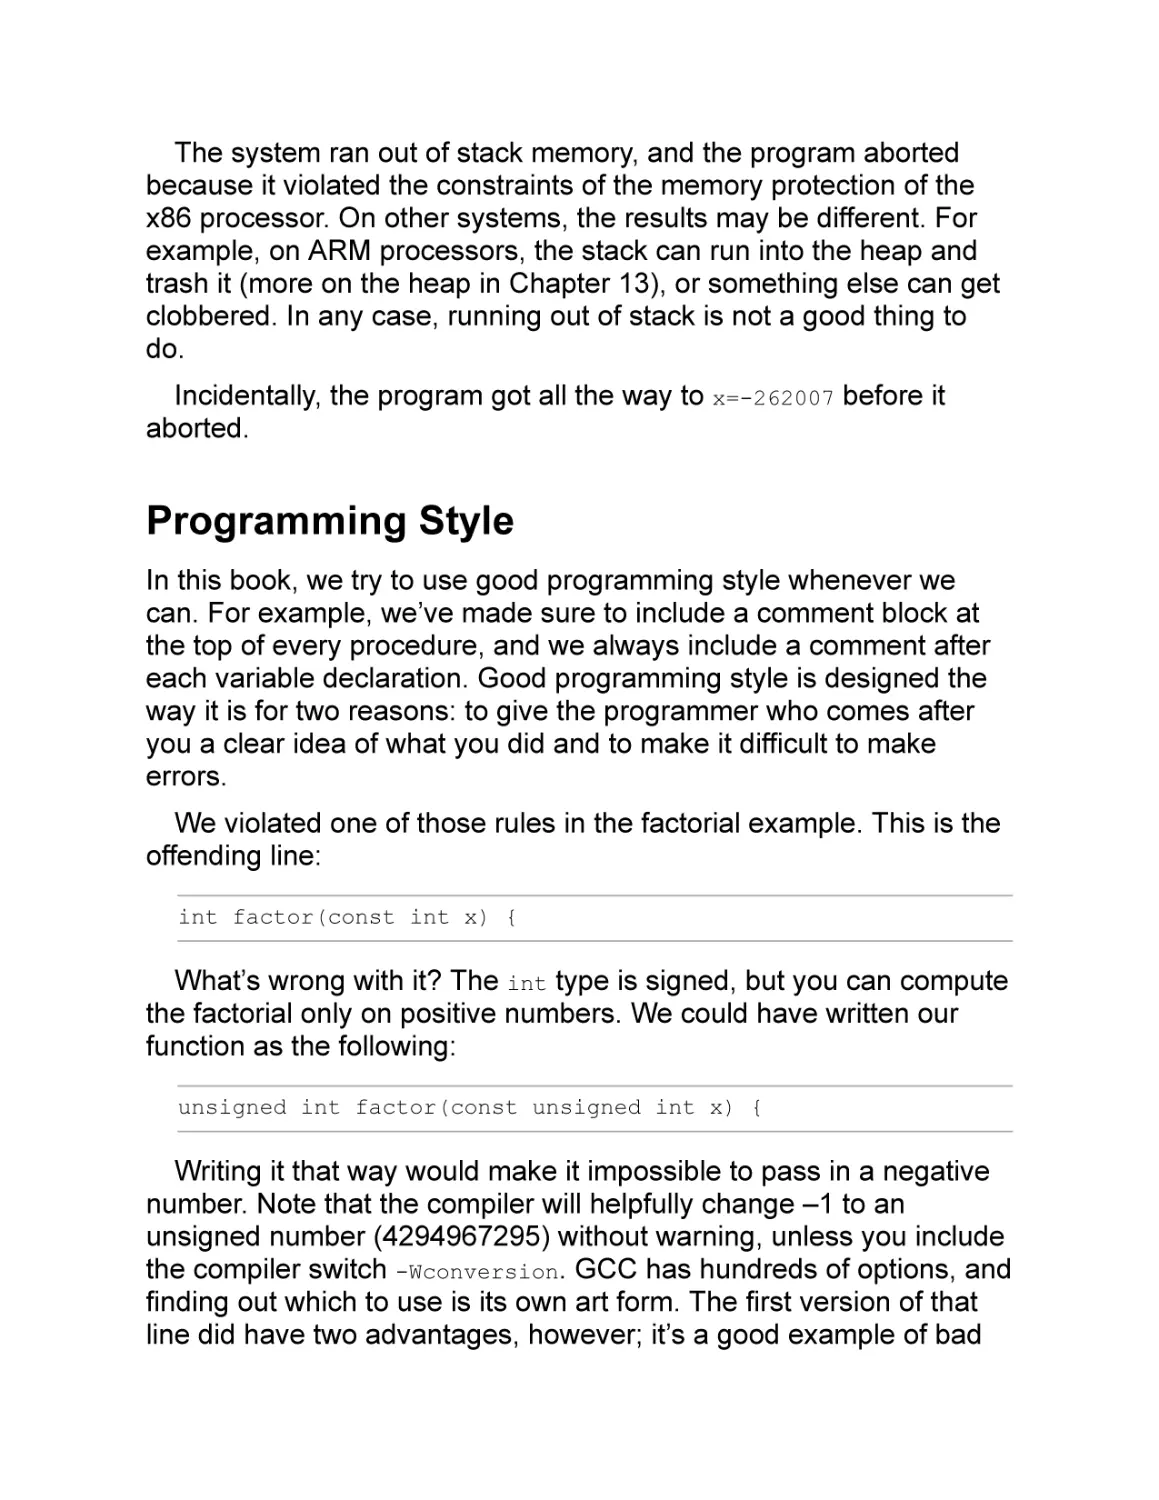 Programming Style